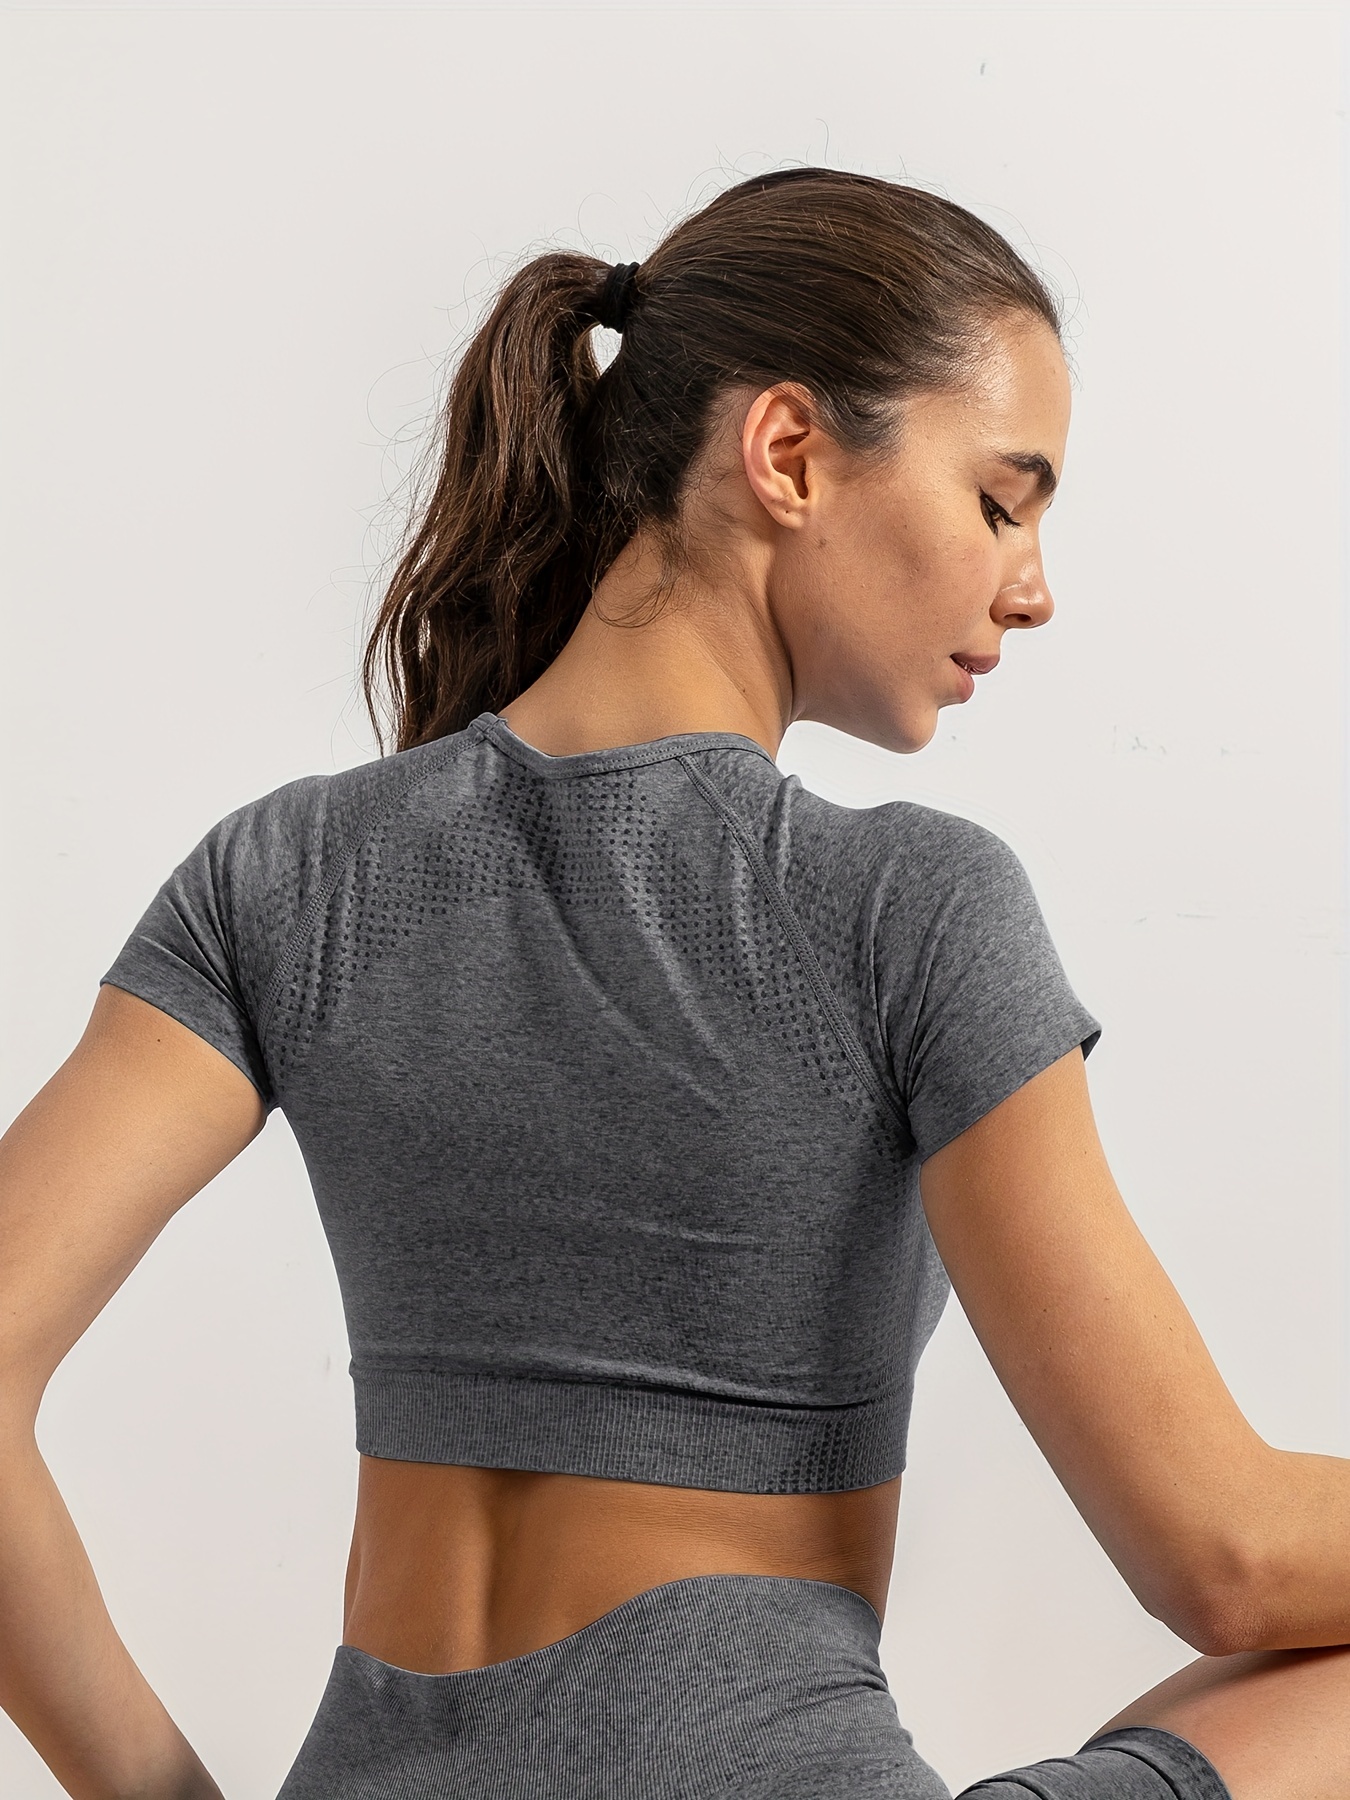 Sports Tight Yoga Shirts Crop Top Women Short Sleeve-shir